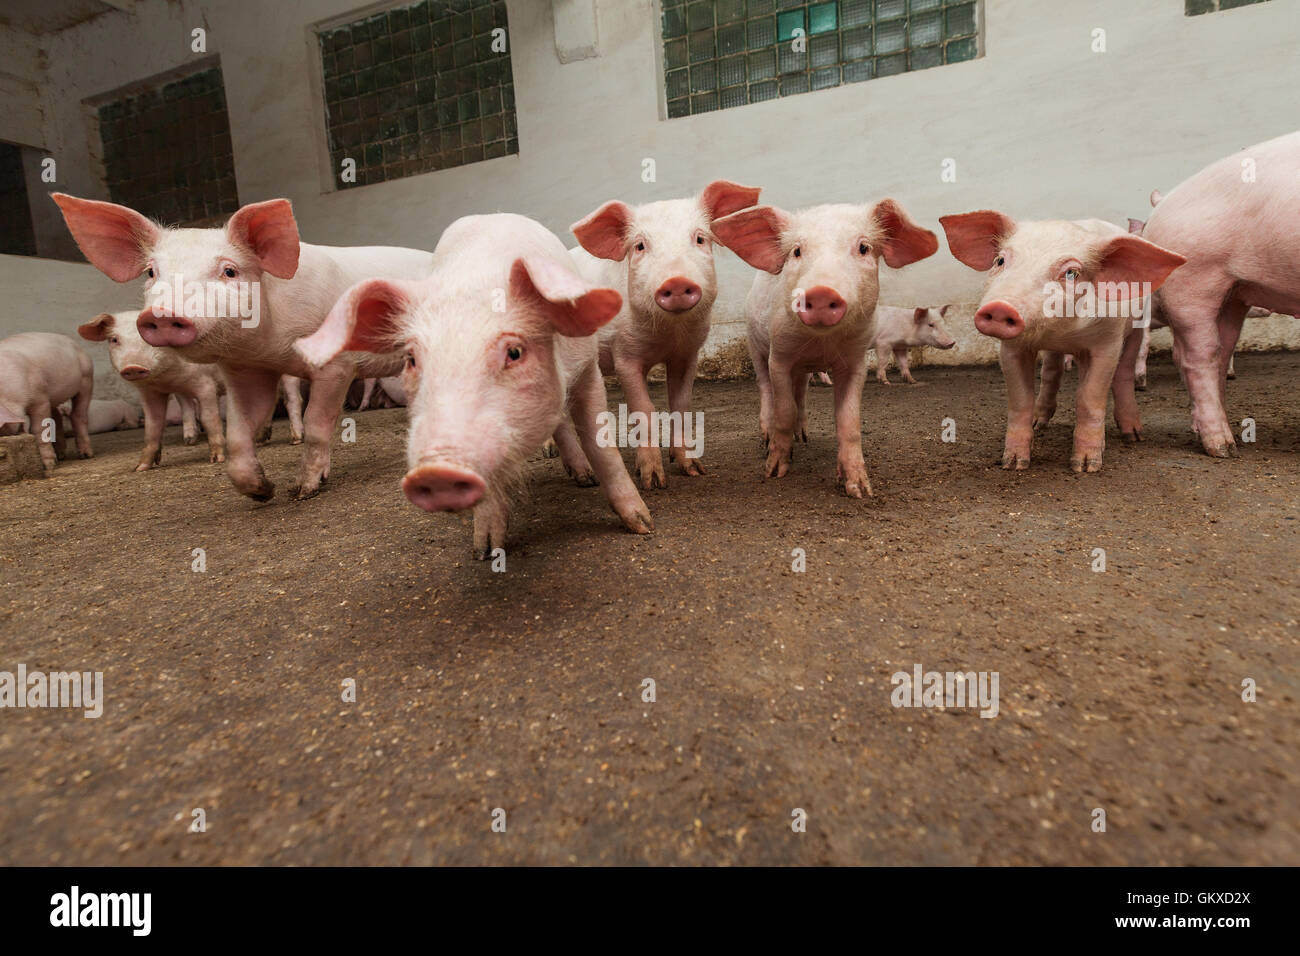 Pig farm Stock Photo